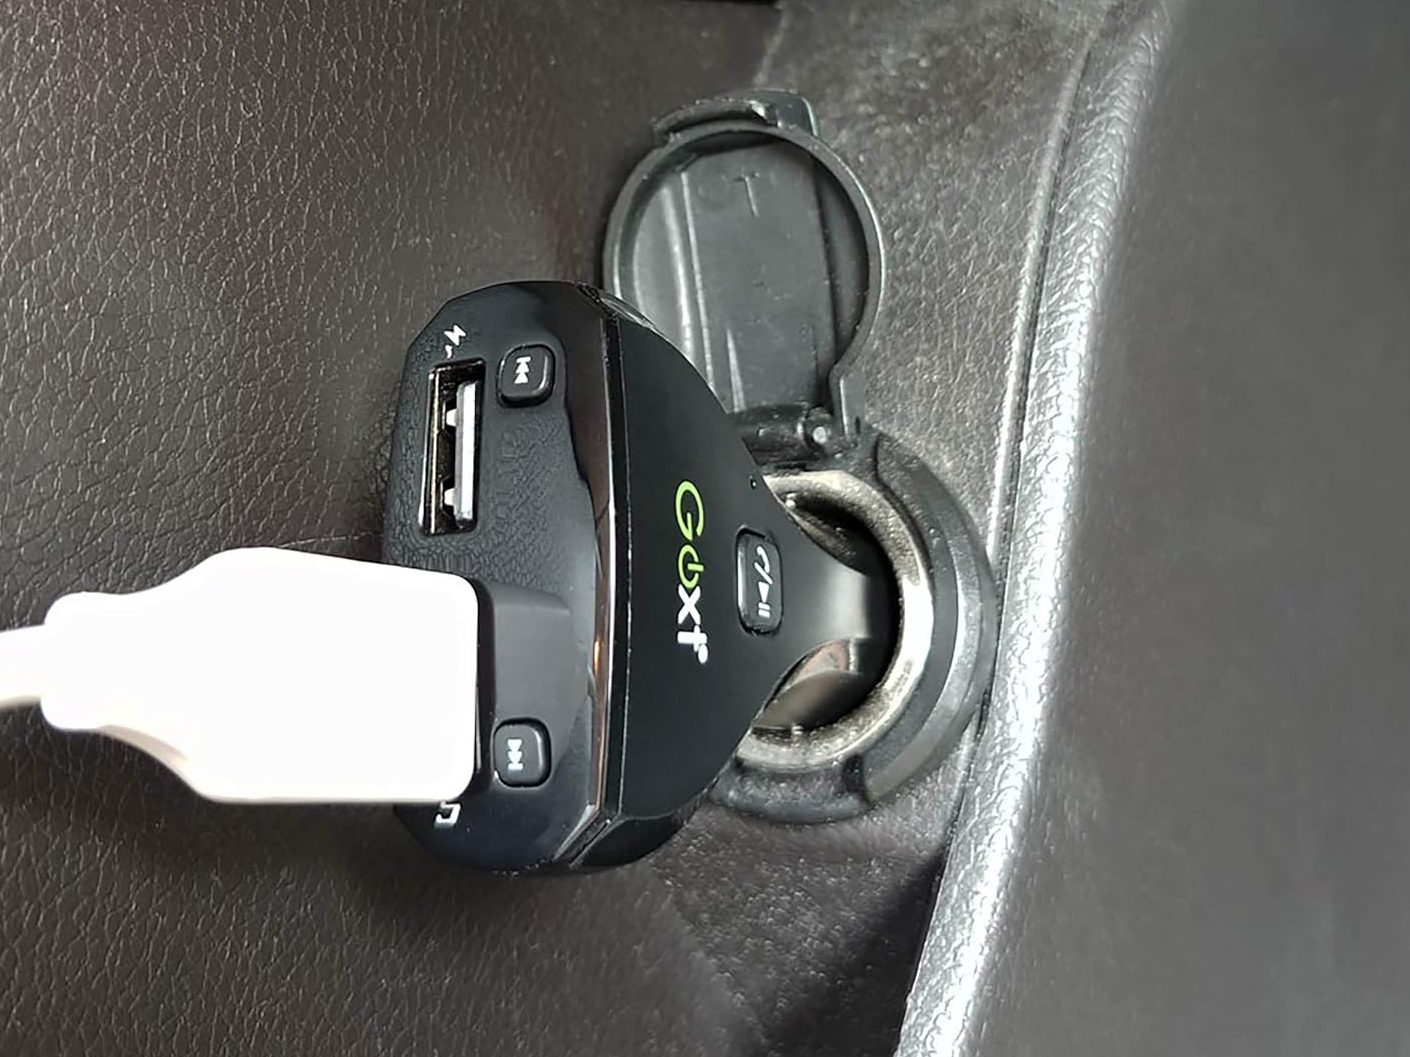 A GOXT Bluetooth transmitter in a car.